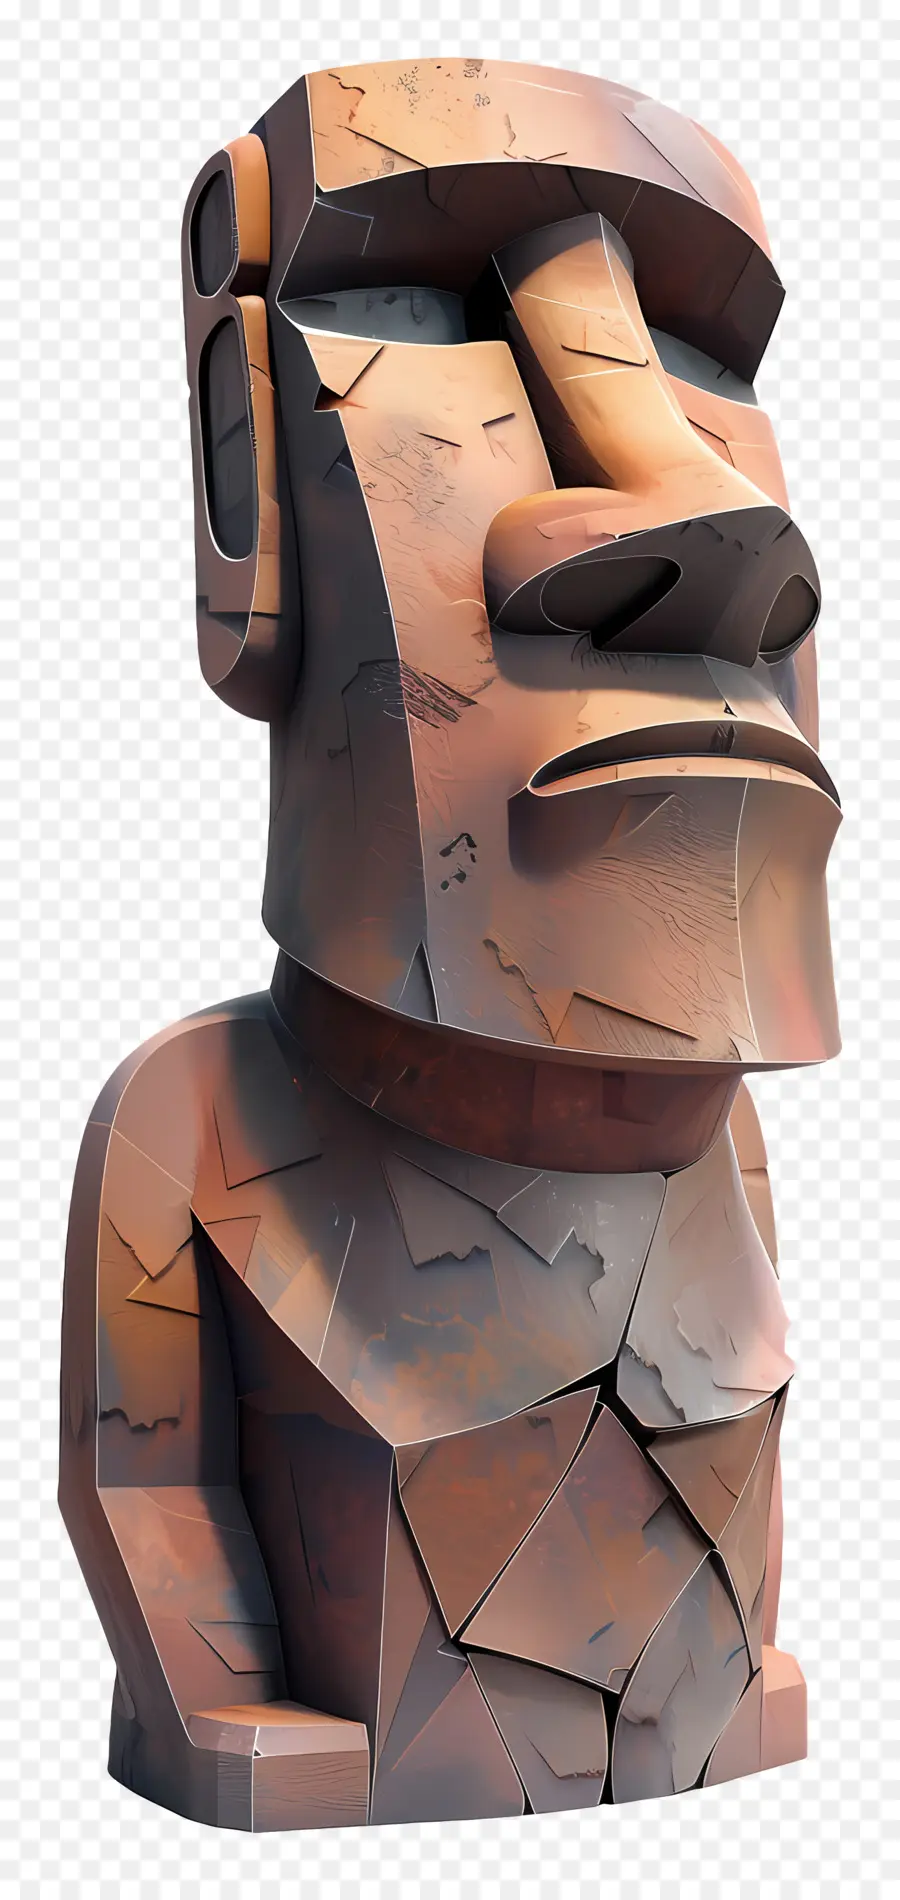 moai abstract statue human figure sculpture stylized face statue rough material art